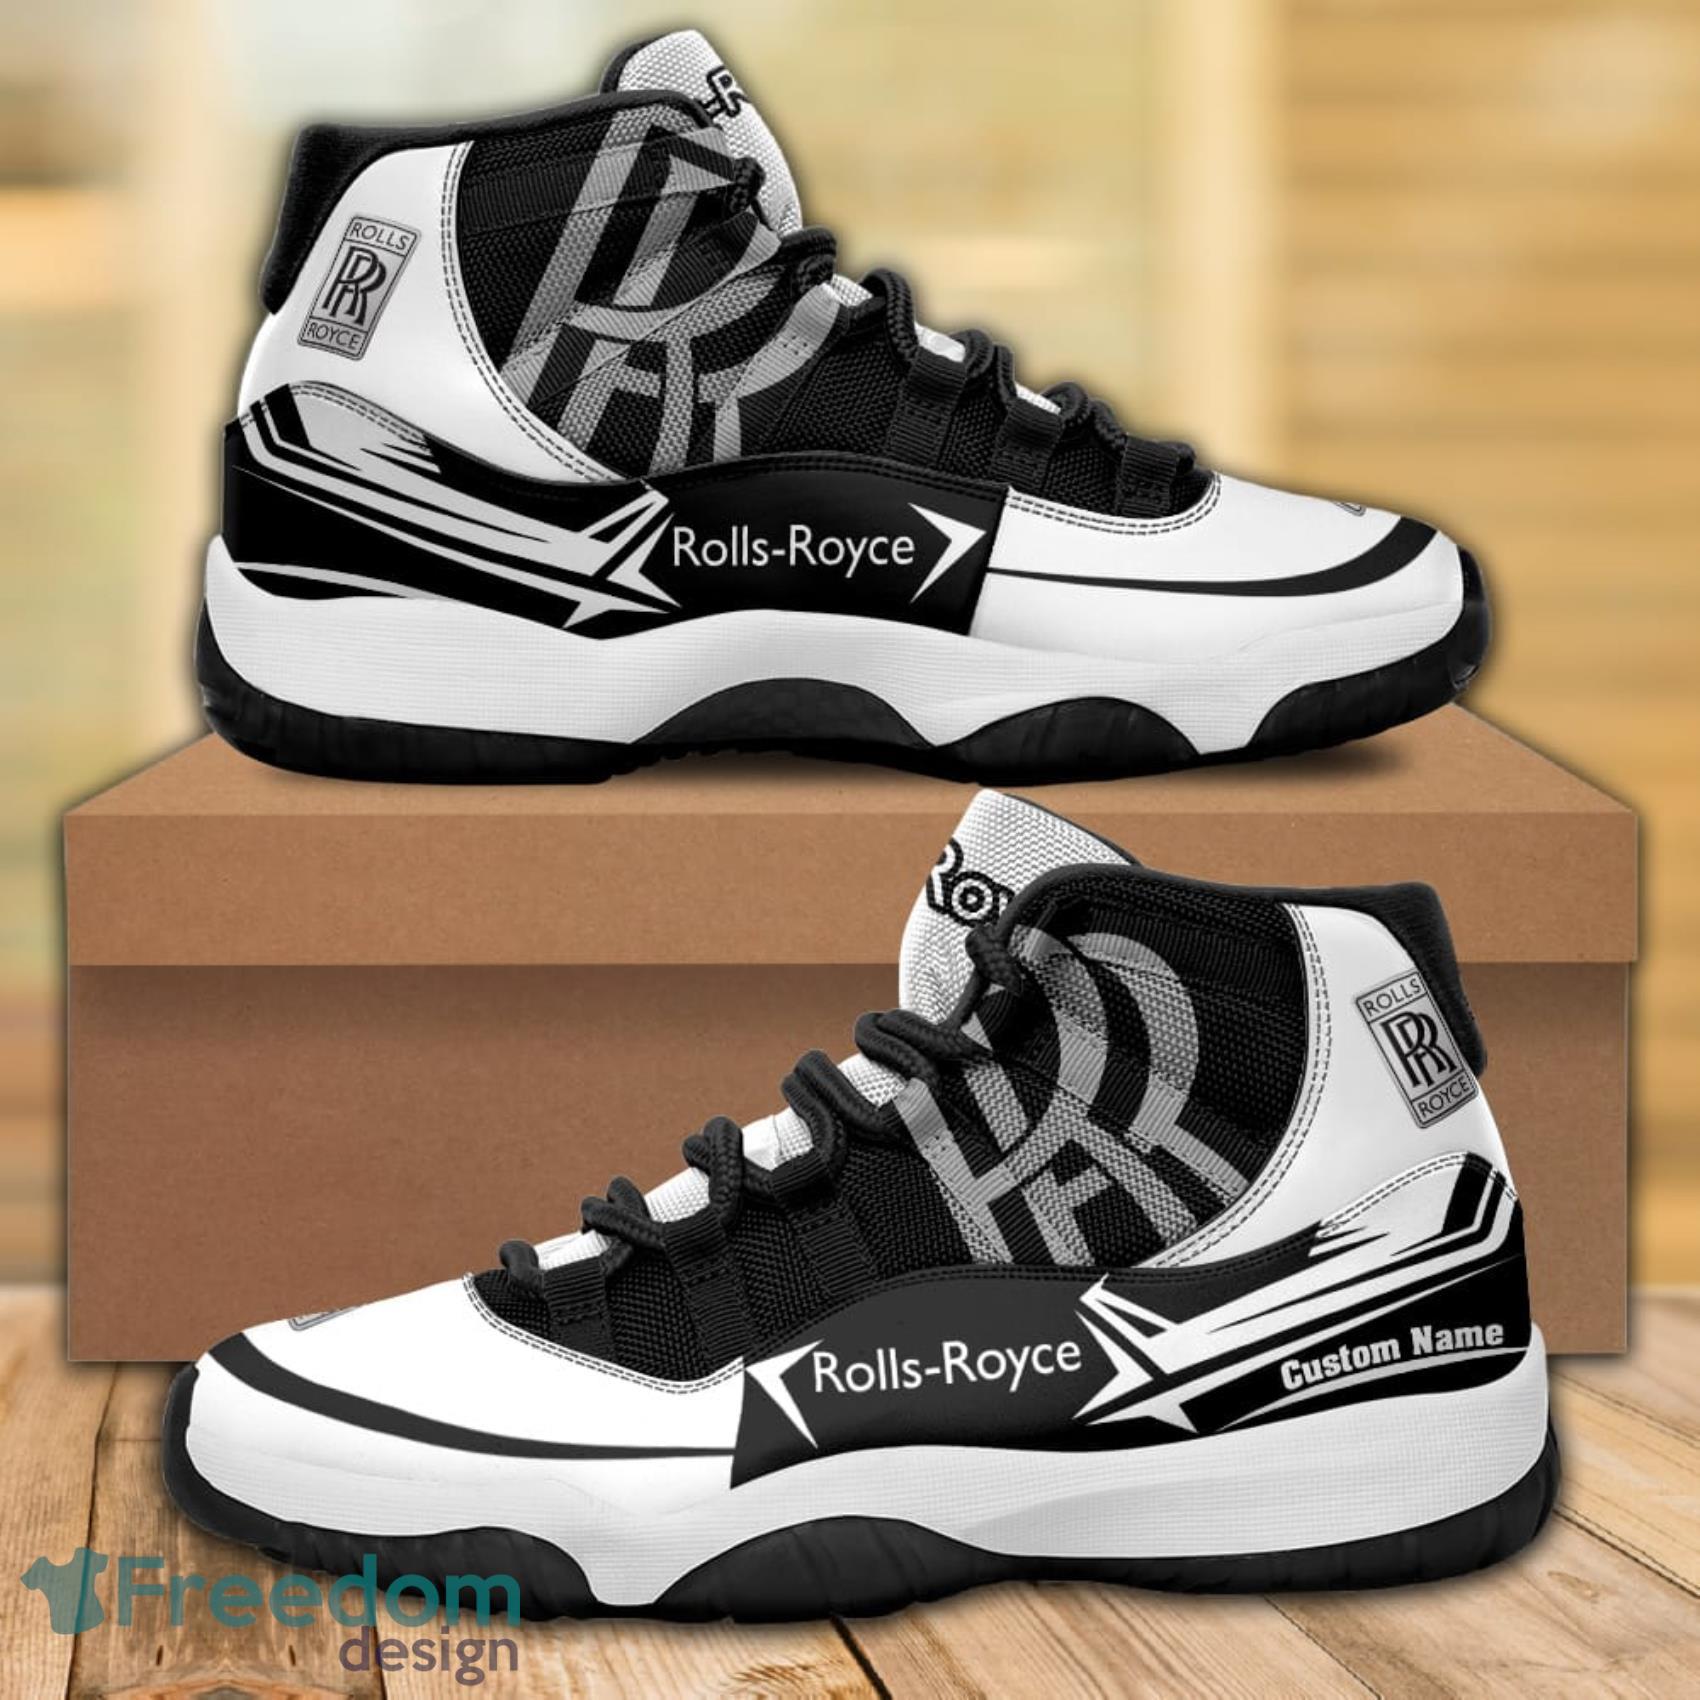 Shelby Air Jordan 4 Shoes Running Sneakers Custom Name For Car